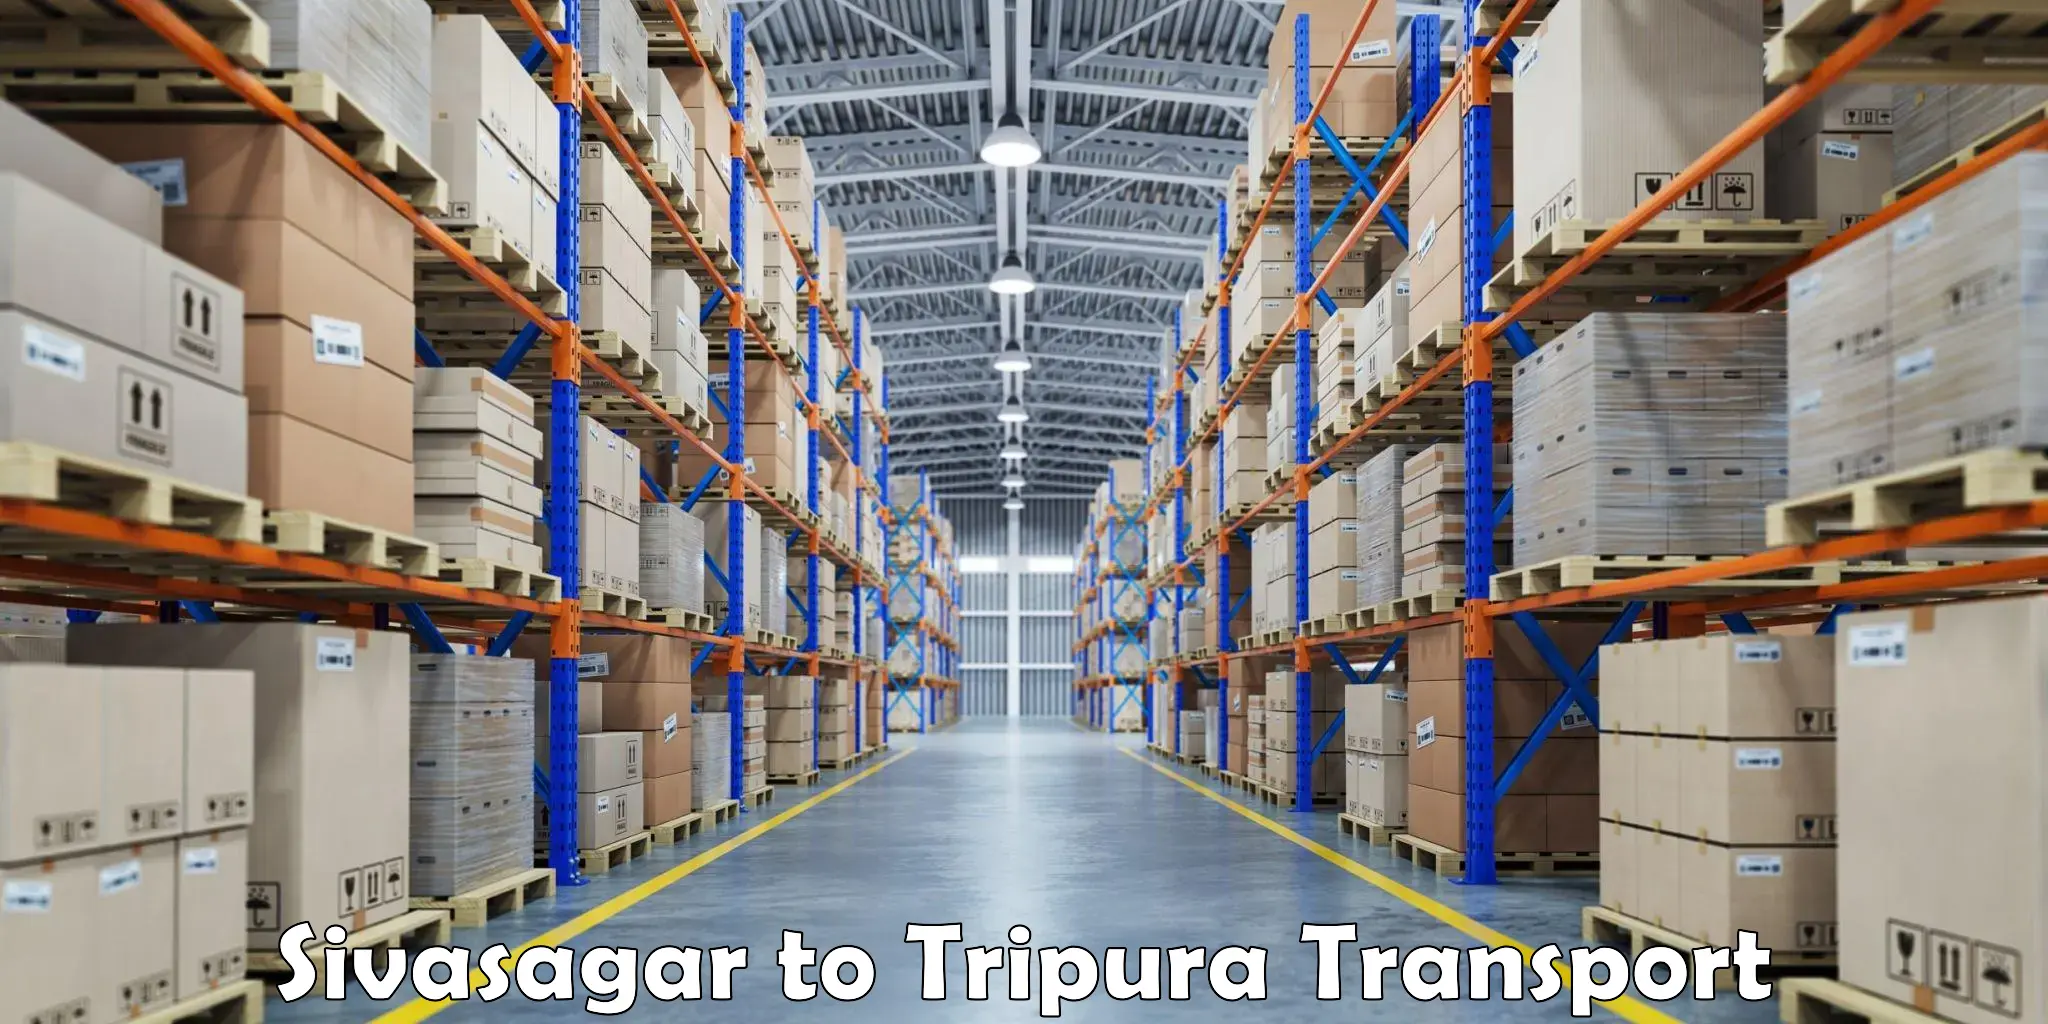 Truck transport companies in India Sivasagar to North Tripura